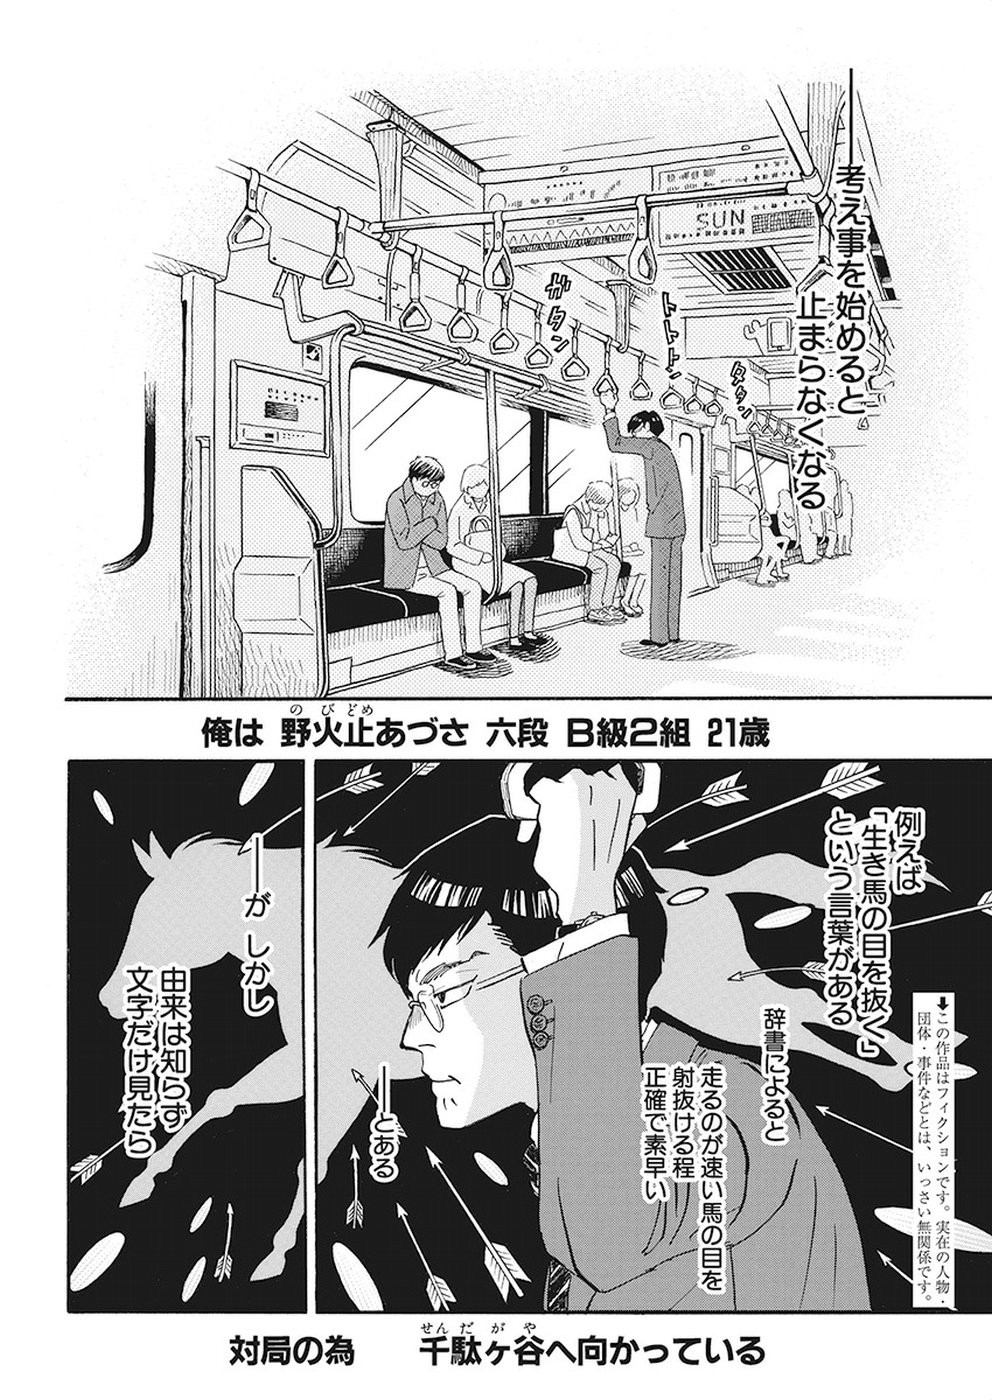 3 Gatsu no Lion - Chapter 156 - Page 2